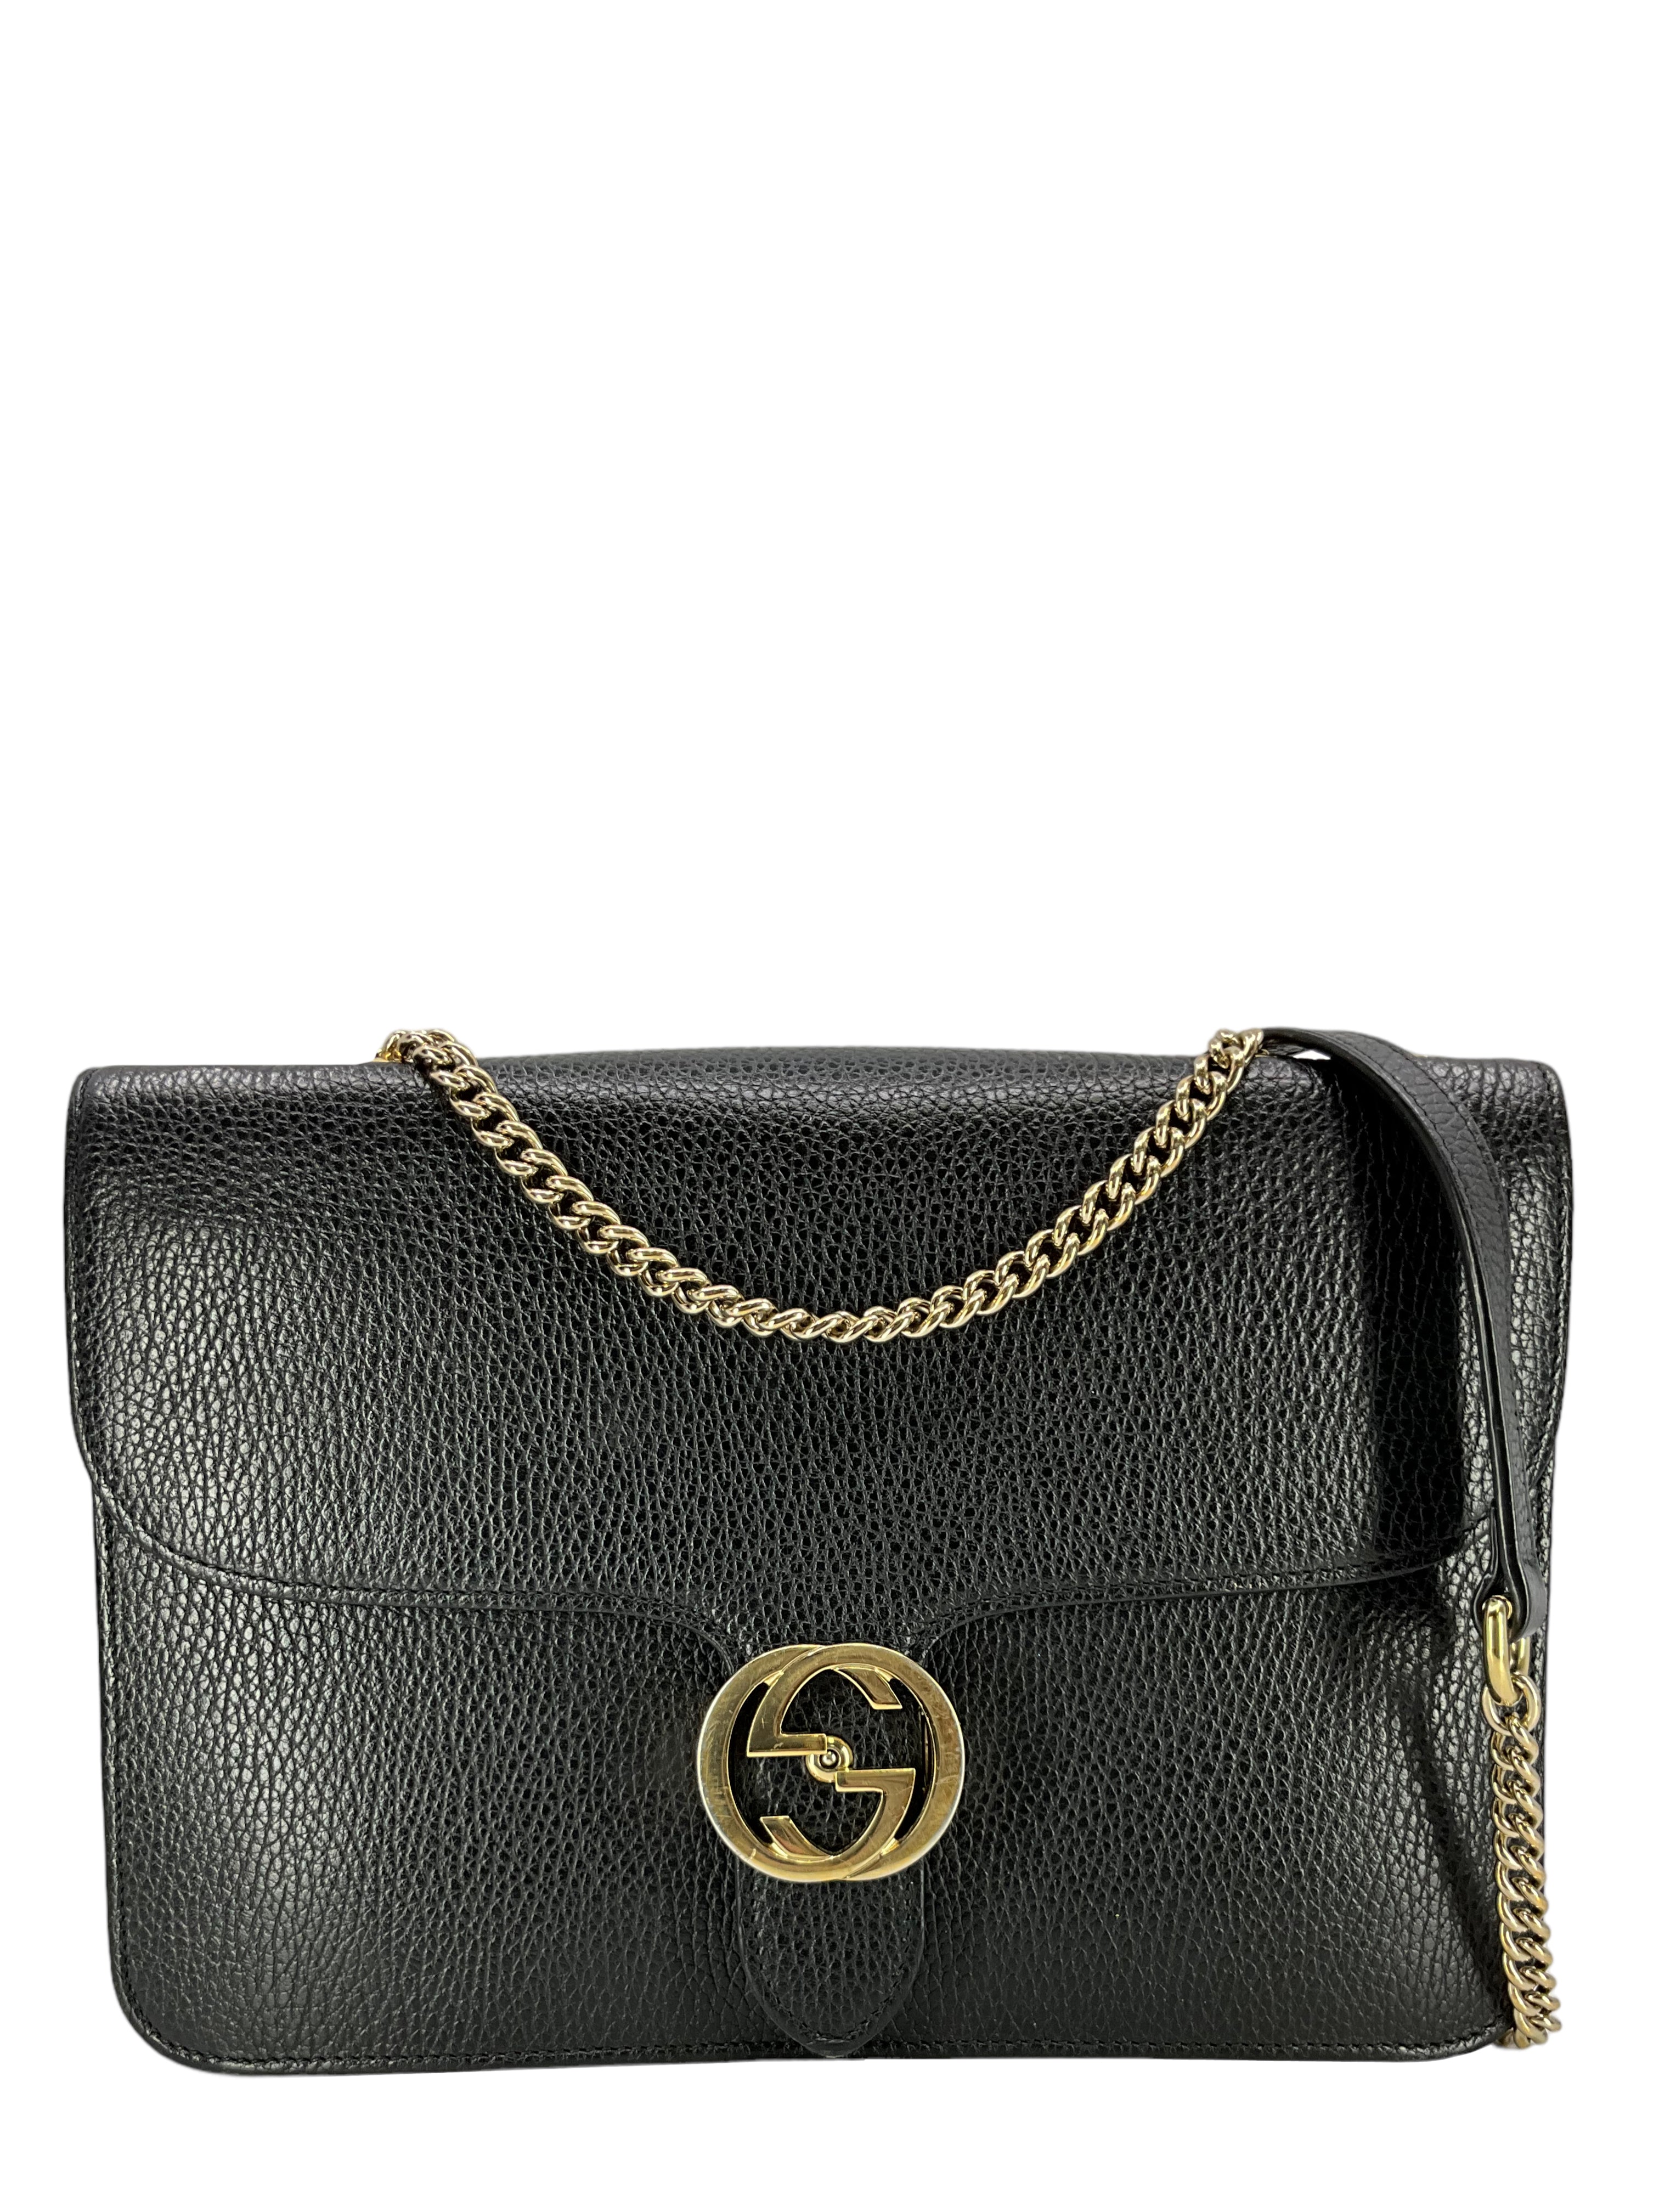 Gucci Medium Dollar Leather Interlocking GG Bag